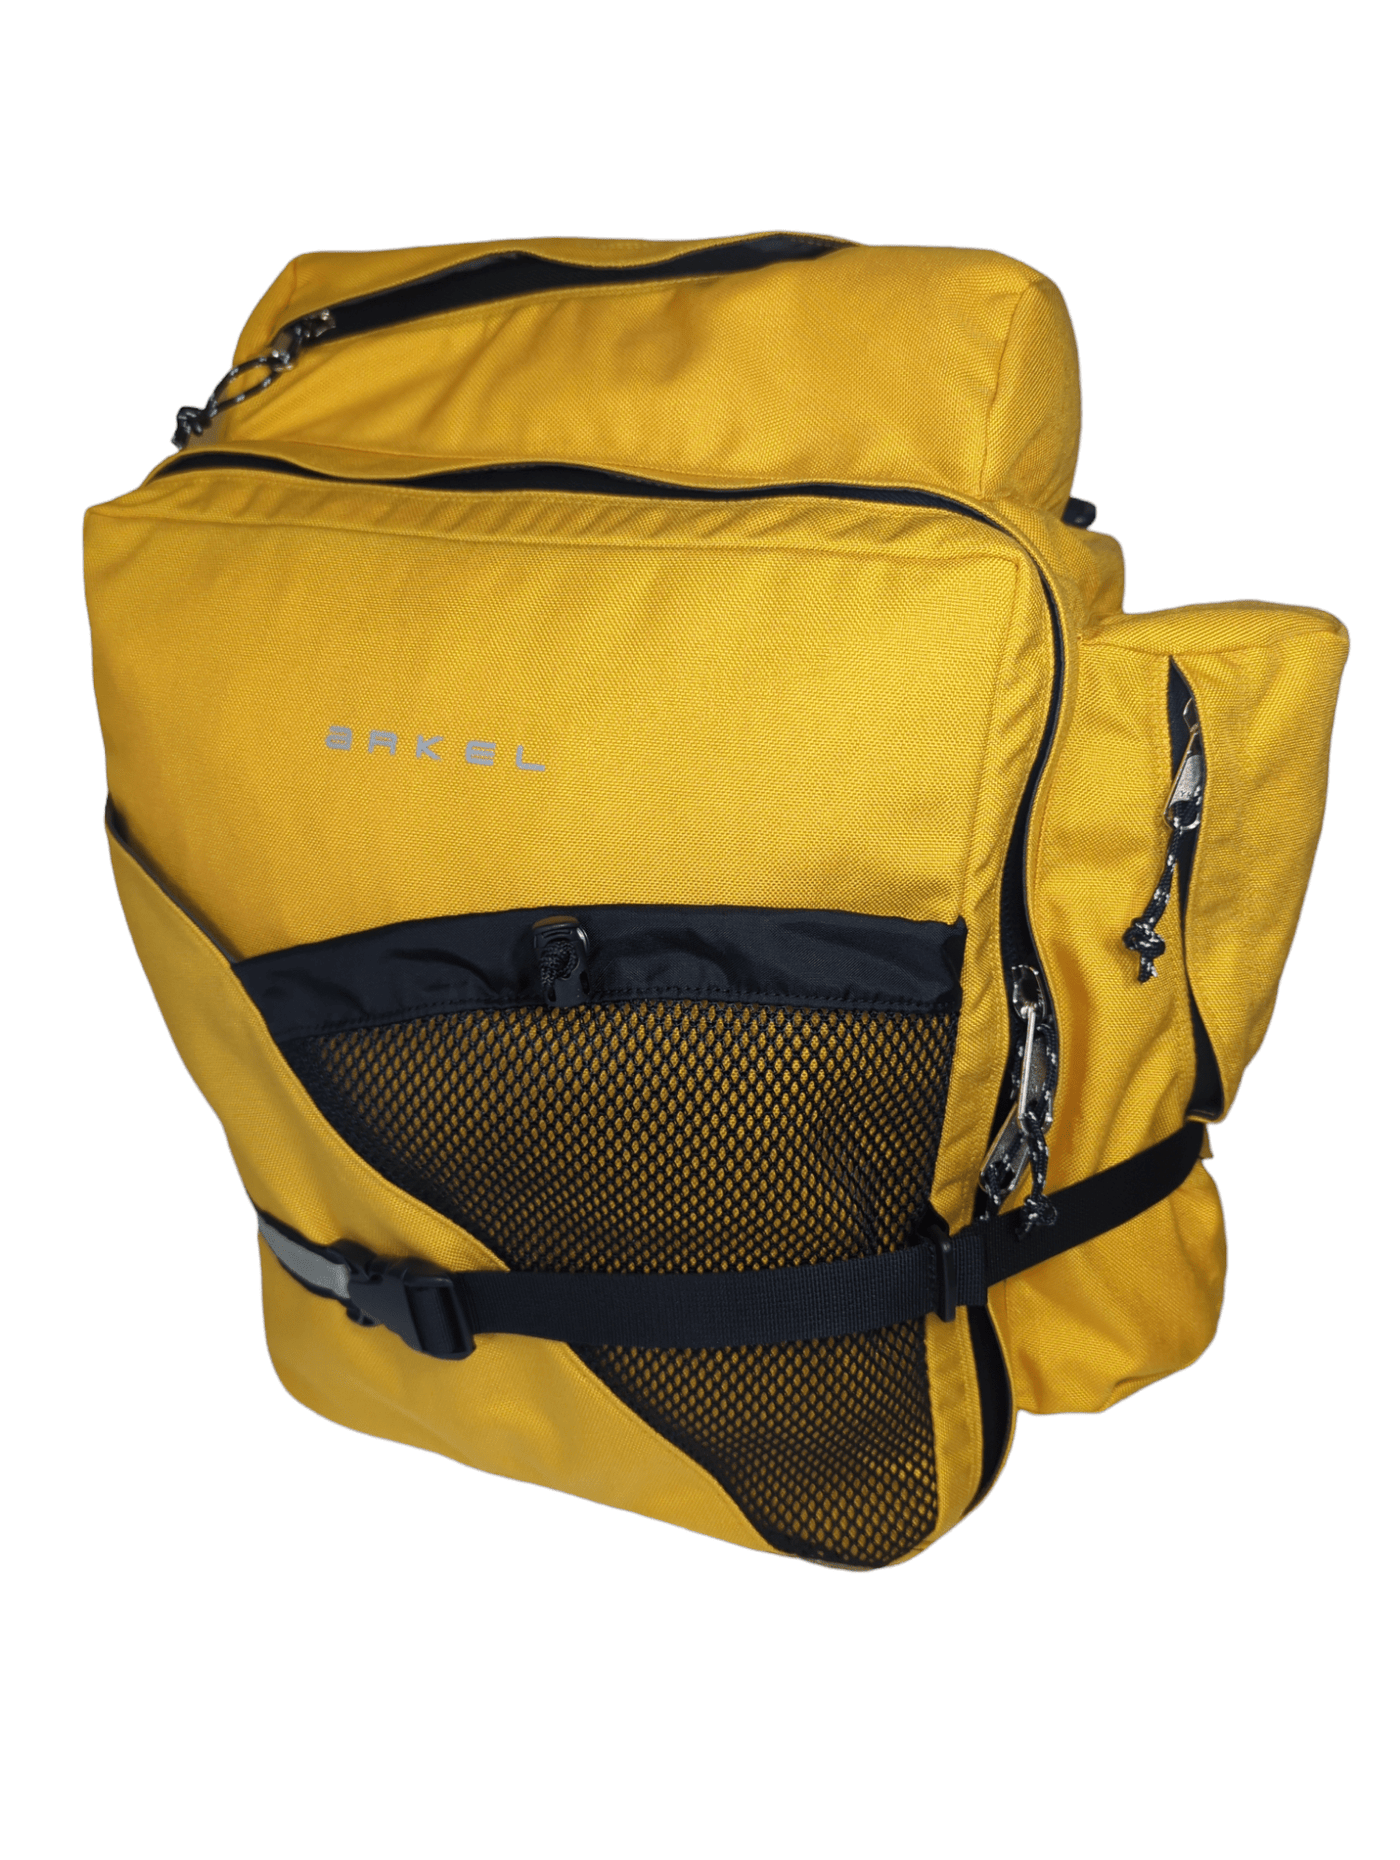 Arkel Bike Bags Cordura Yellow / 42 L / Pair T-42 Classic - Touring Panniers